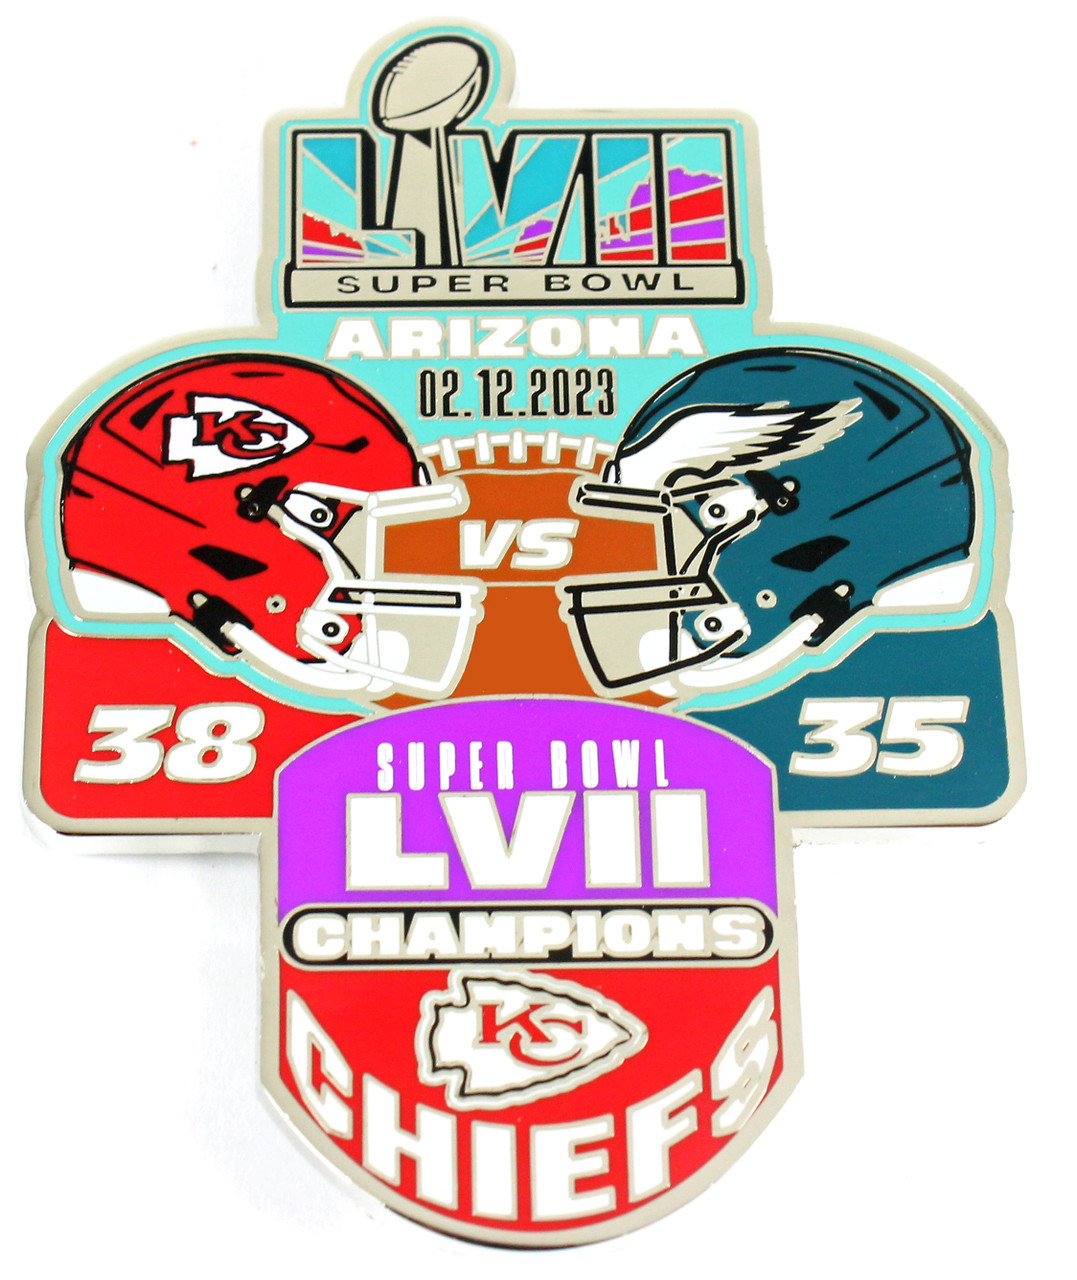 Kansas City Super Bowl Champions 2023 V2 Pin